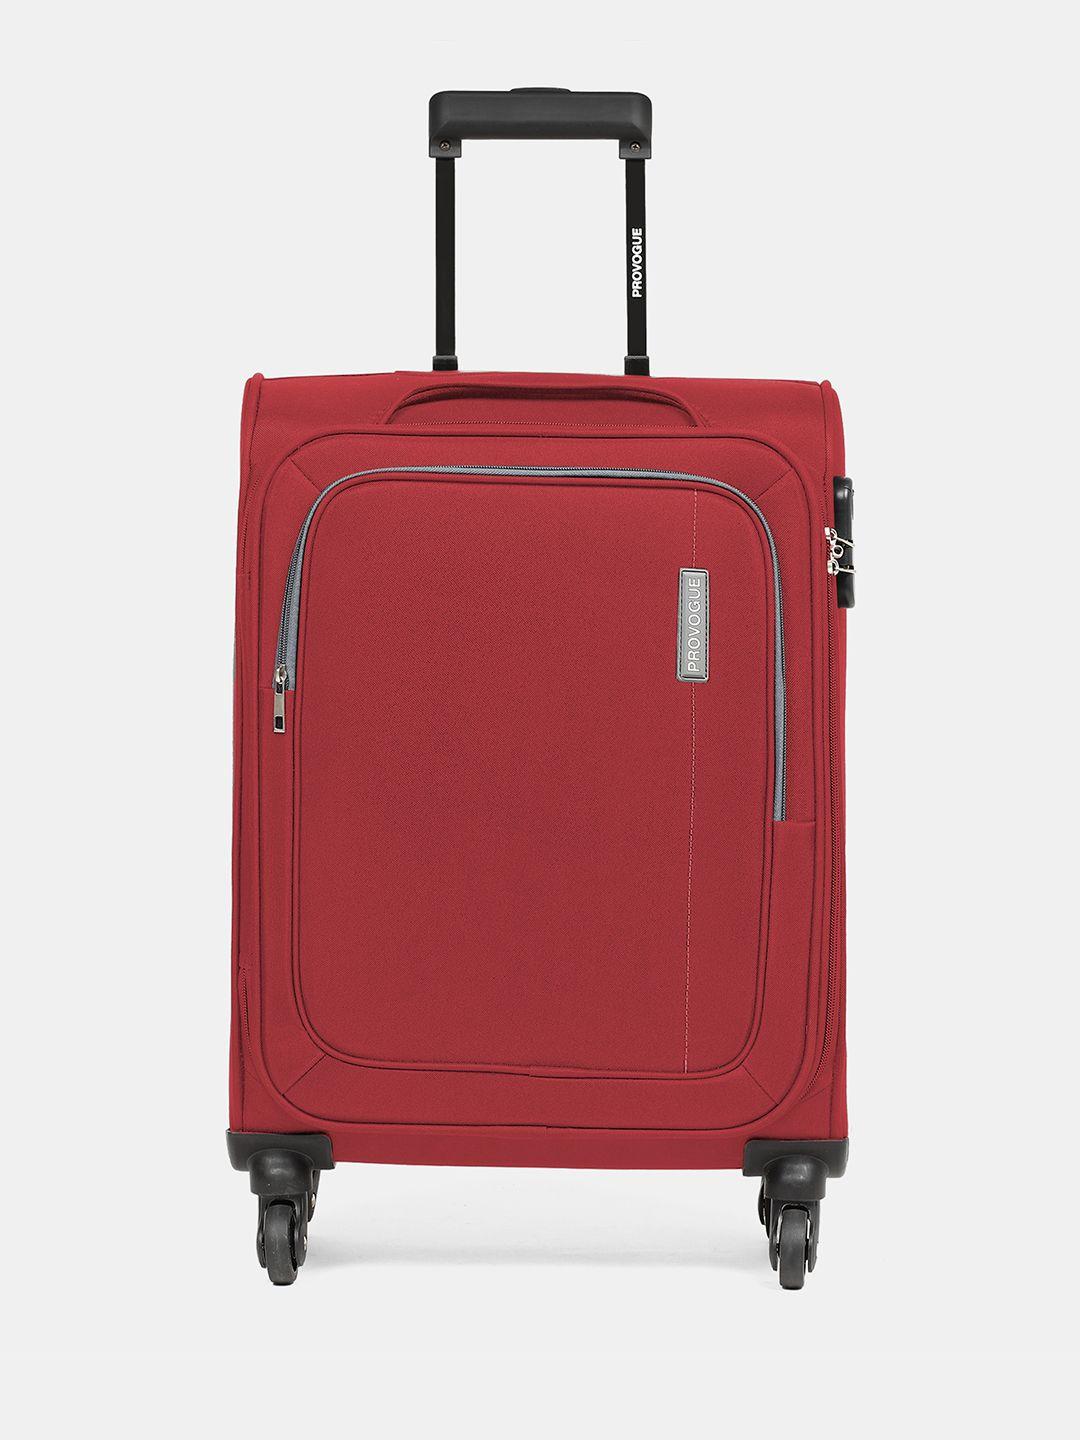 provogue lead cabin trolley suitcase